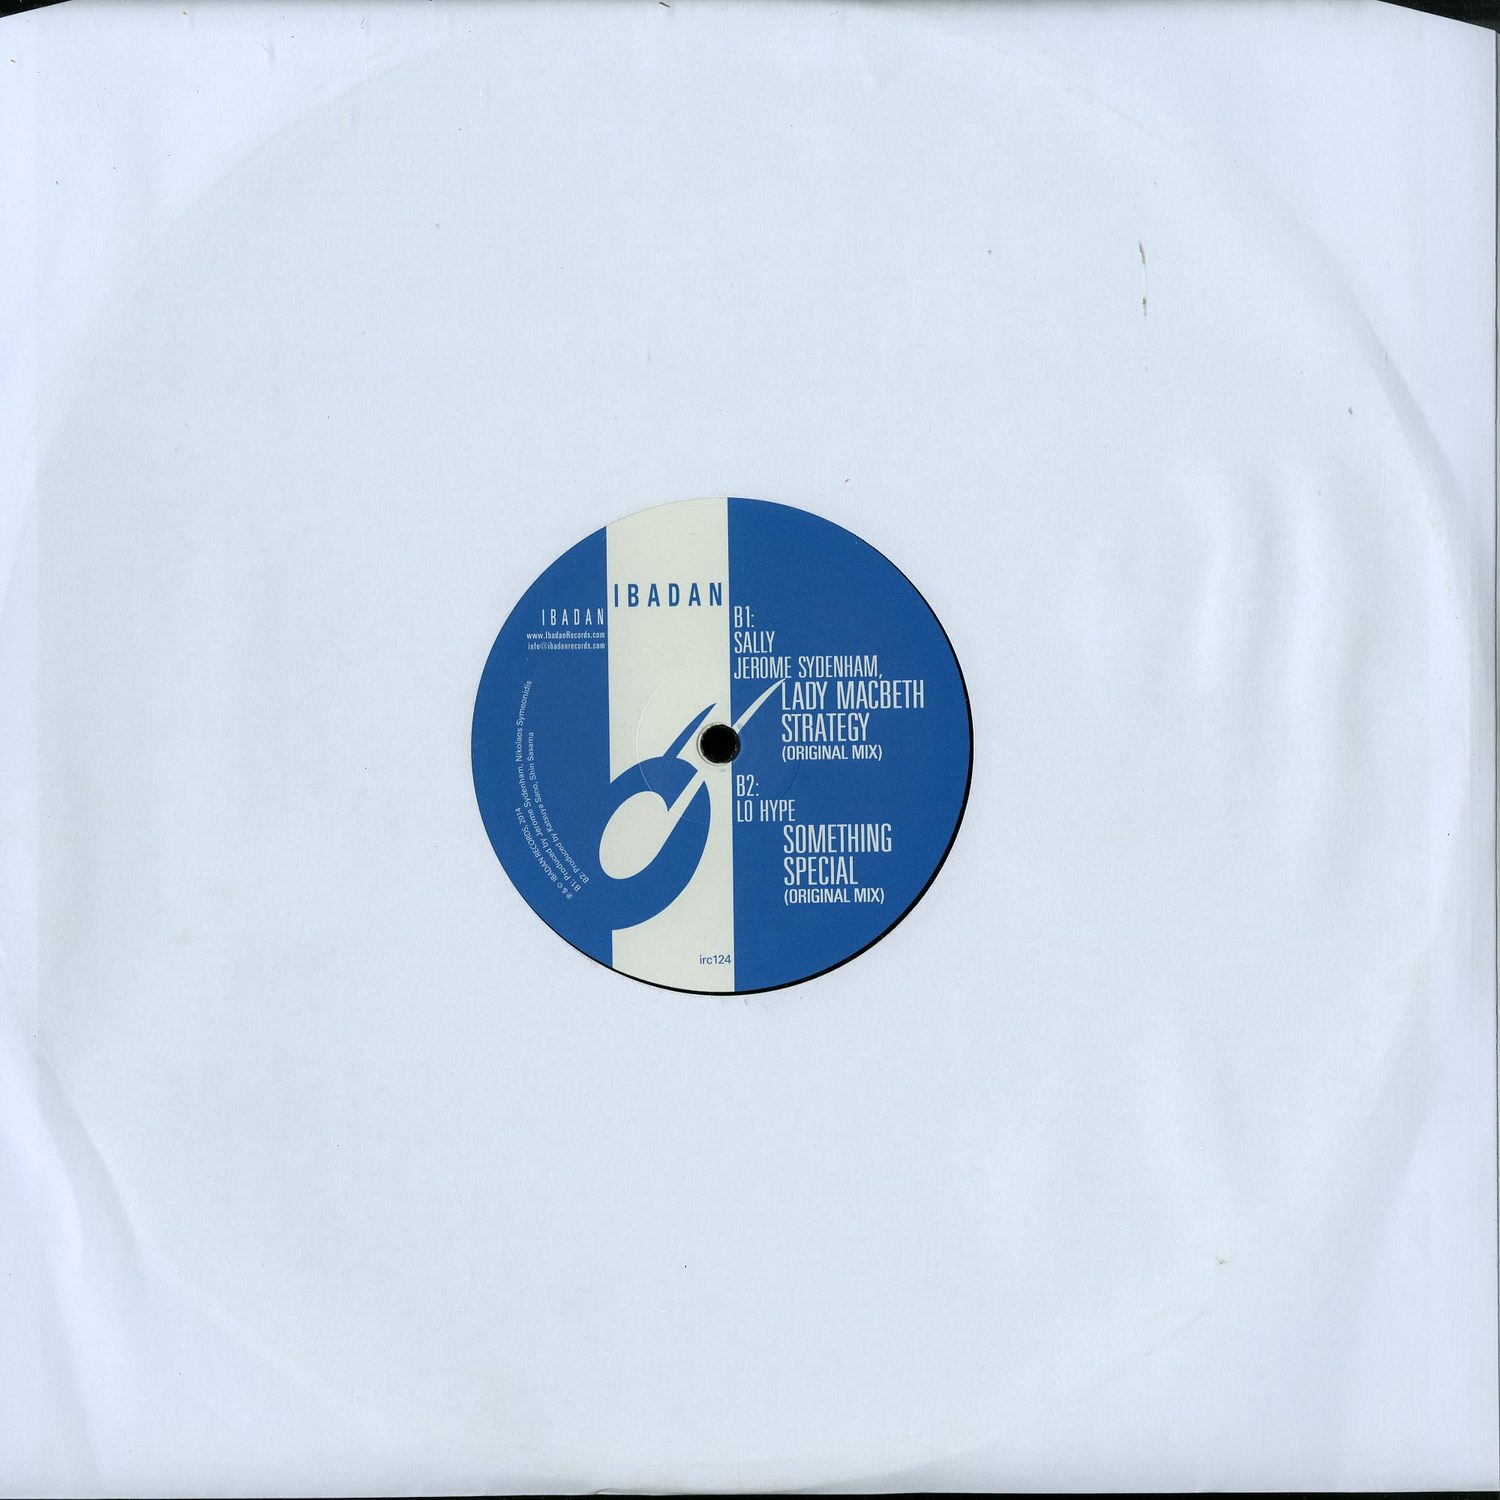 Jerome Sydenham & Sally, Angry Kids, Toto Chiavetta - LADY MACBETH STRATEGY EP